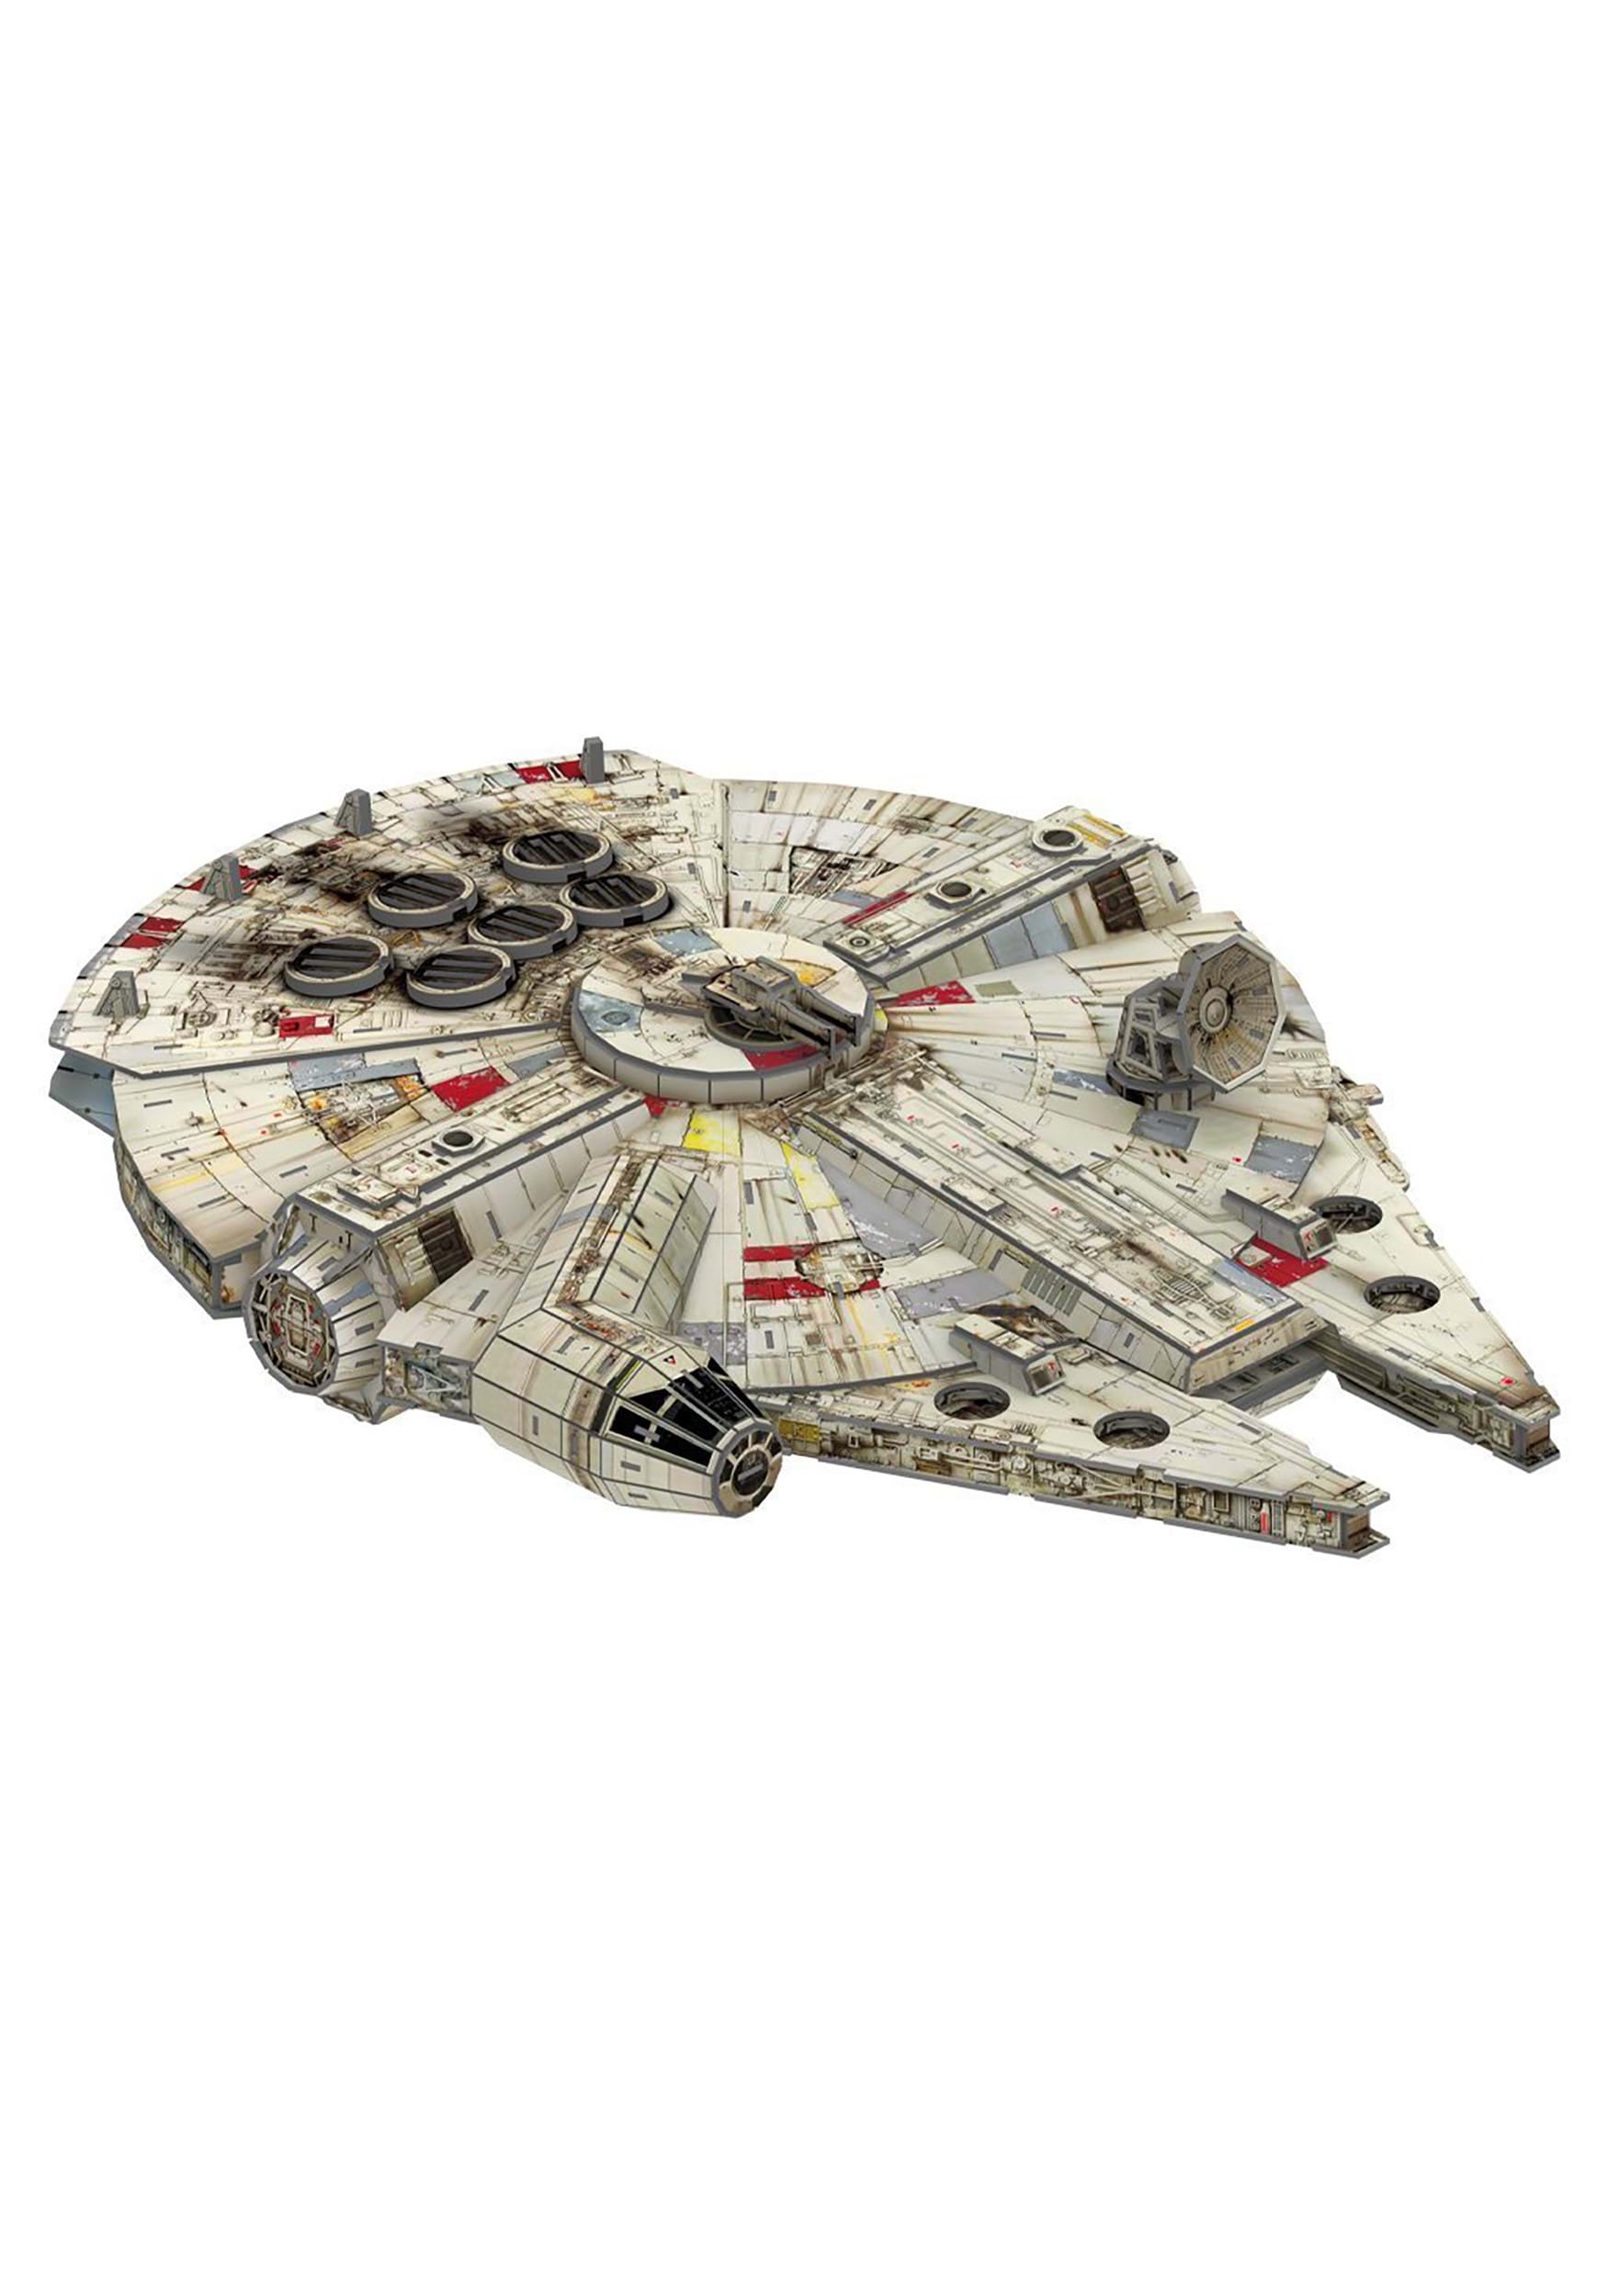 Millennium Falcon Star Wars Paper Model Kit